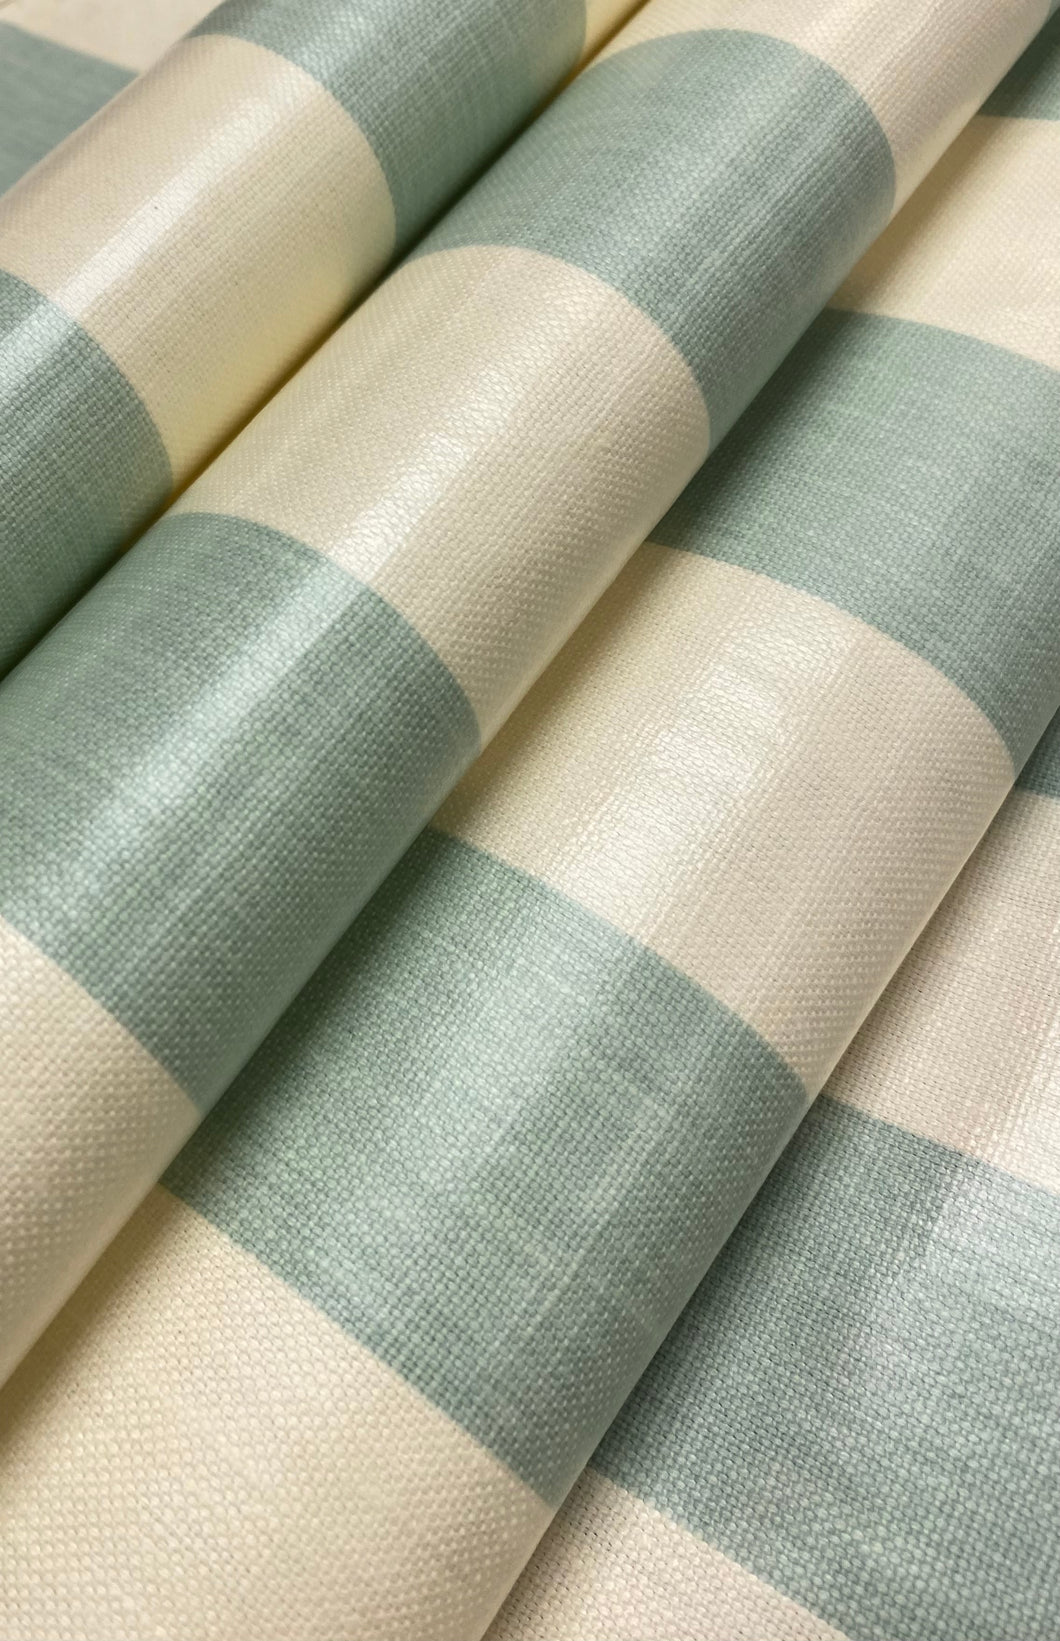 1.5 Yard Schumacher Laminated Water & Stain Resistant Seafoam Green Cream Linen Stripe Upholstery Fabric WHS 4651